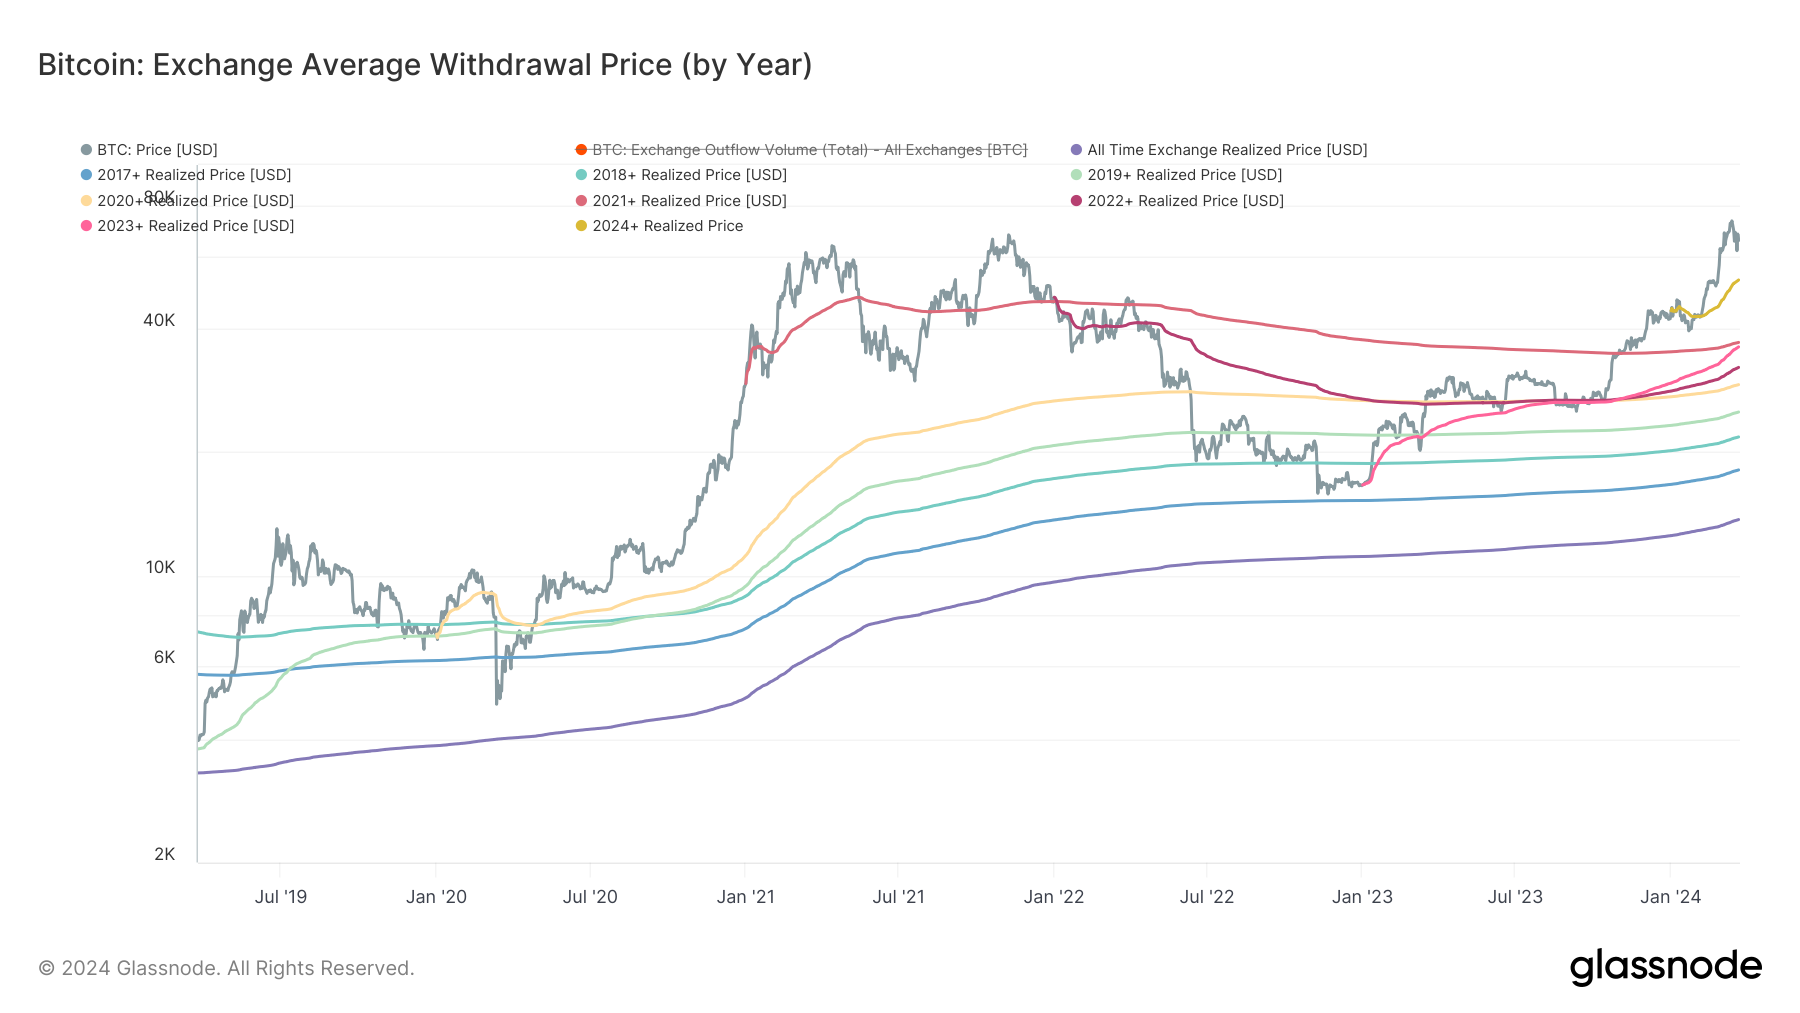 Bitcoin buyers remain optimistic despite price surges